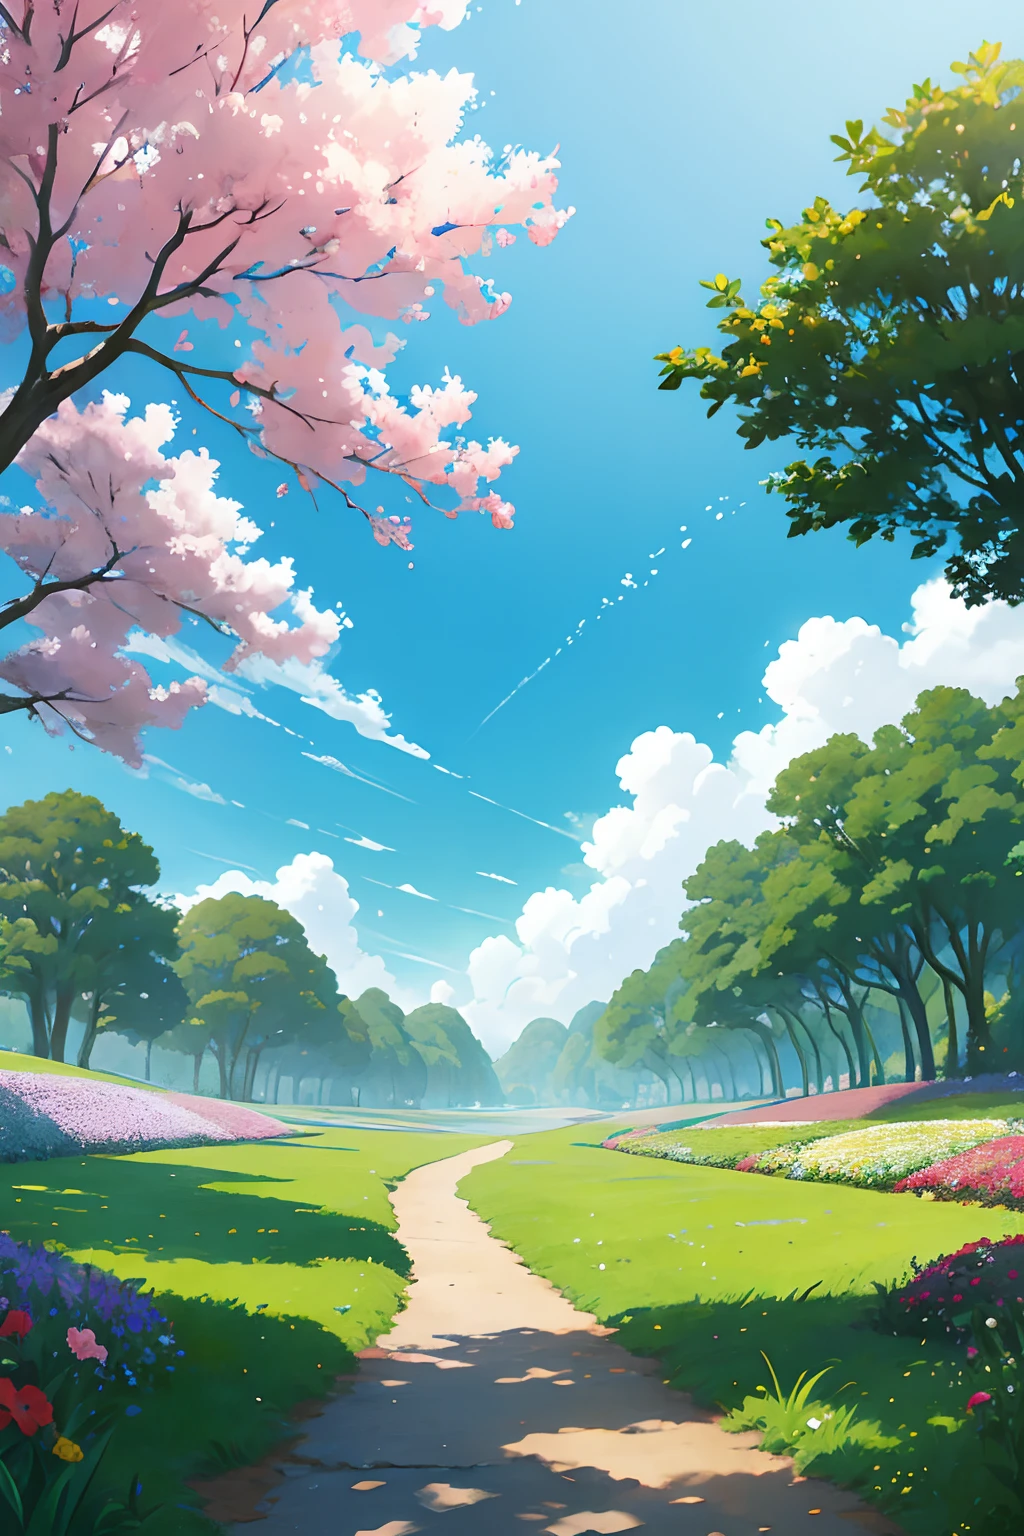 backgroud de campo de flores, アニメ,  Studio Ghibli style